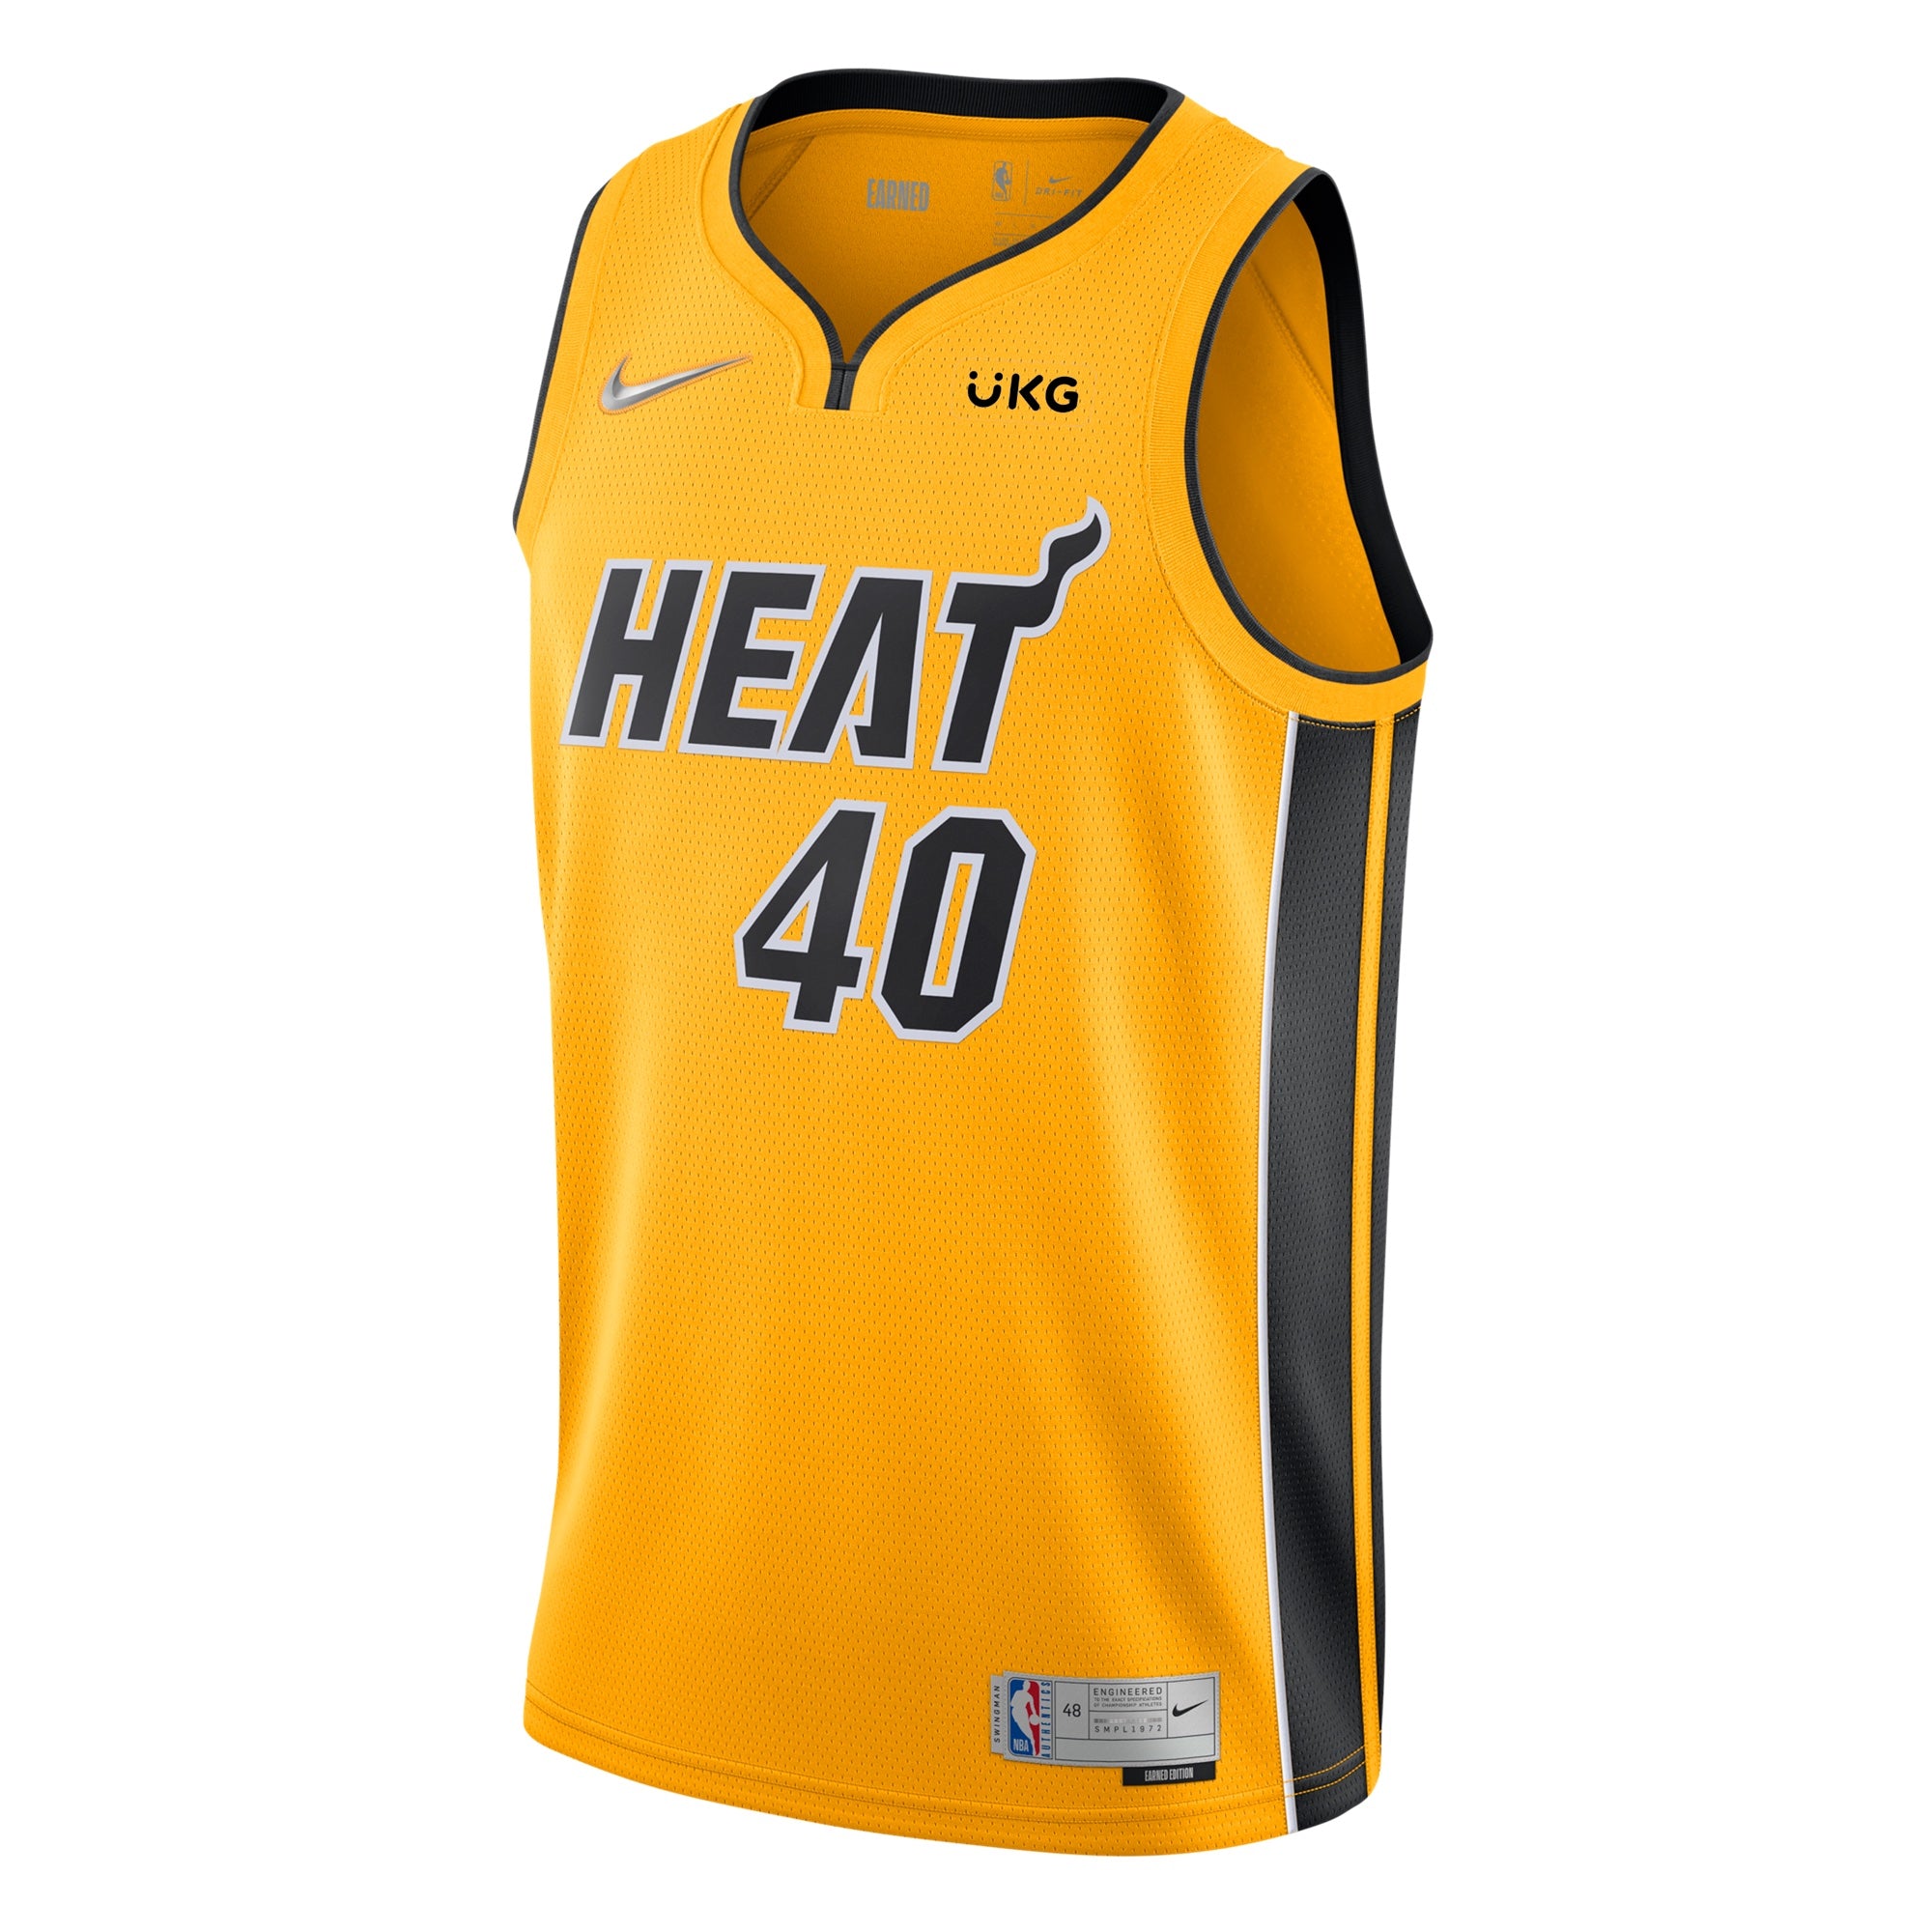 Authentic Nike Men's NBA Miami Heat Vice Versa Swingman Jersey - M